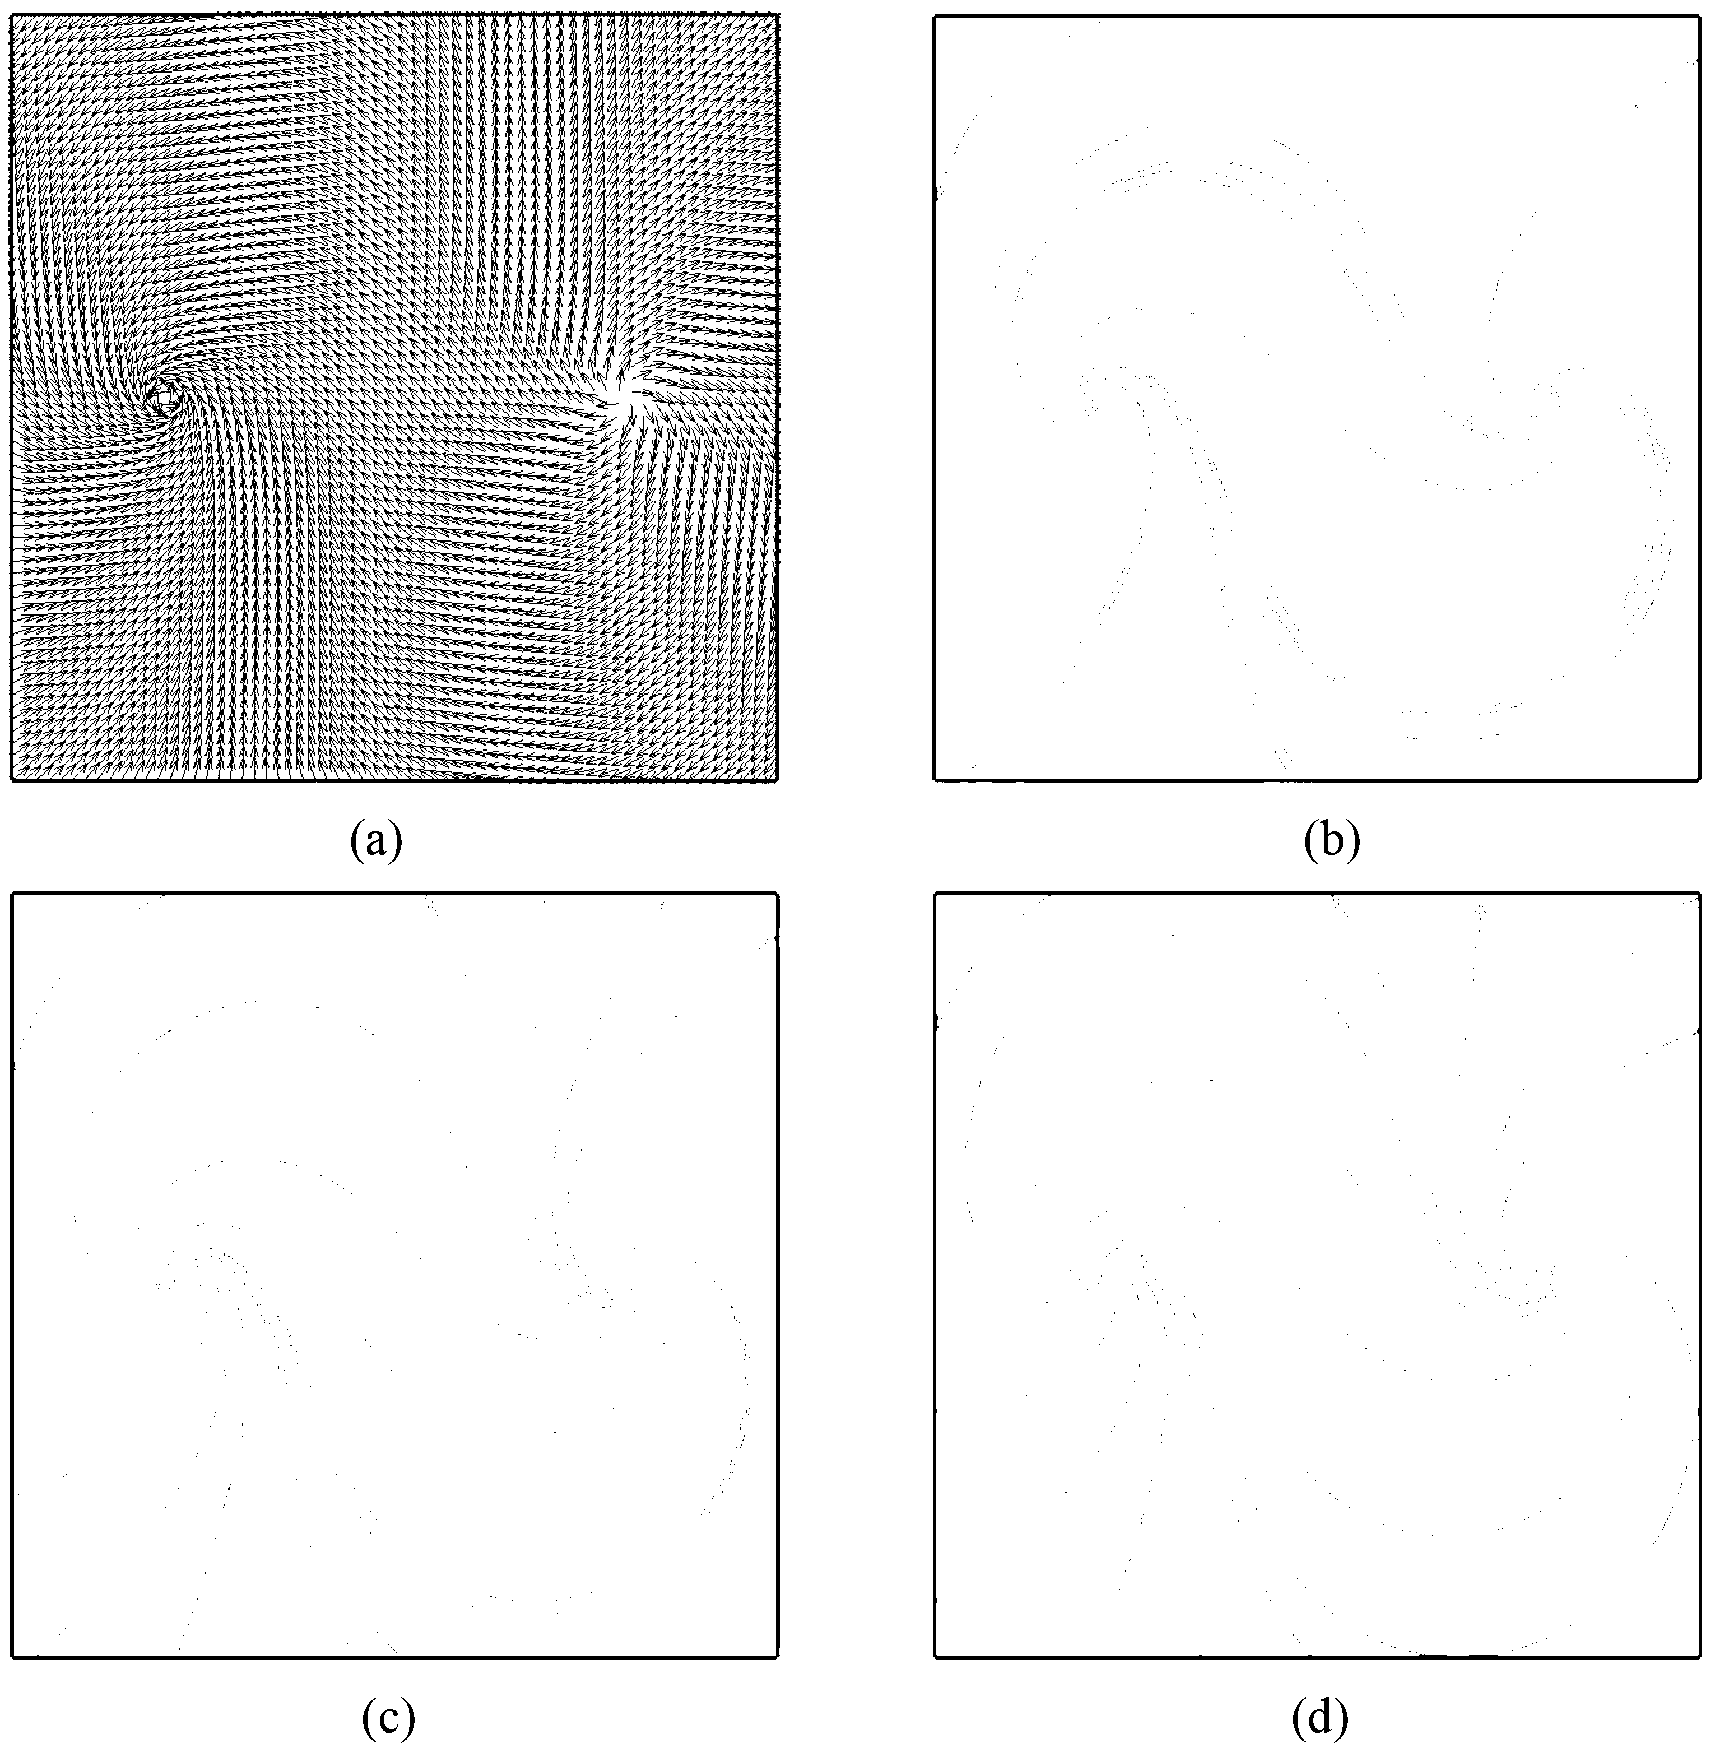 Flow field visualization method based on flow line gravity center Voronoi diagram